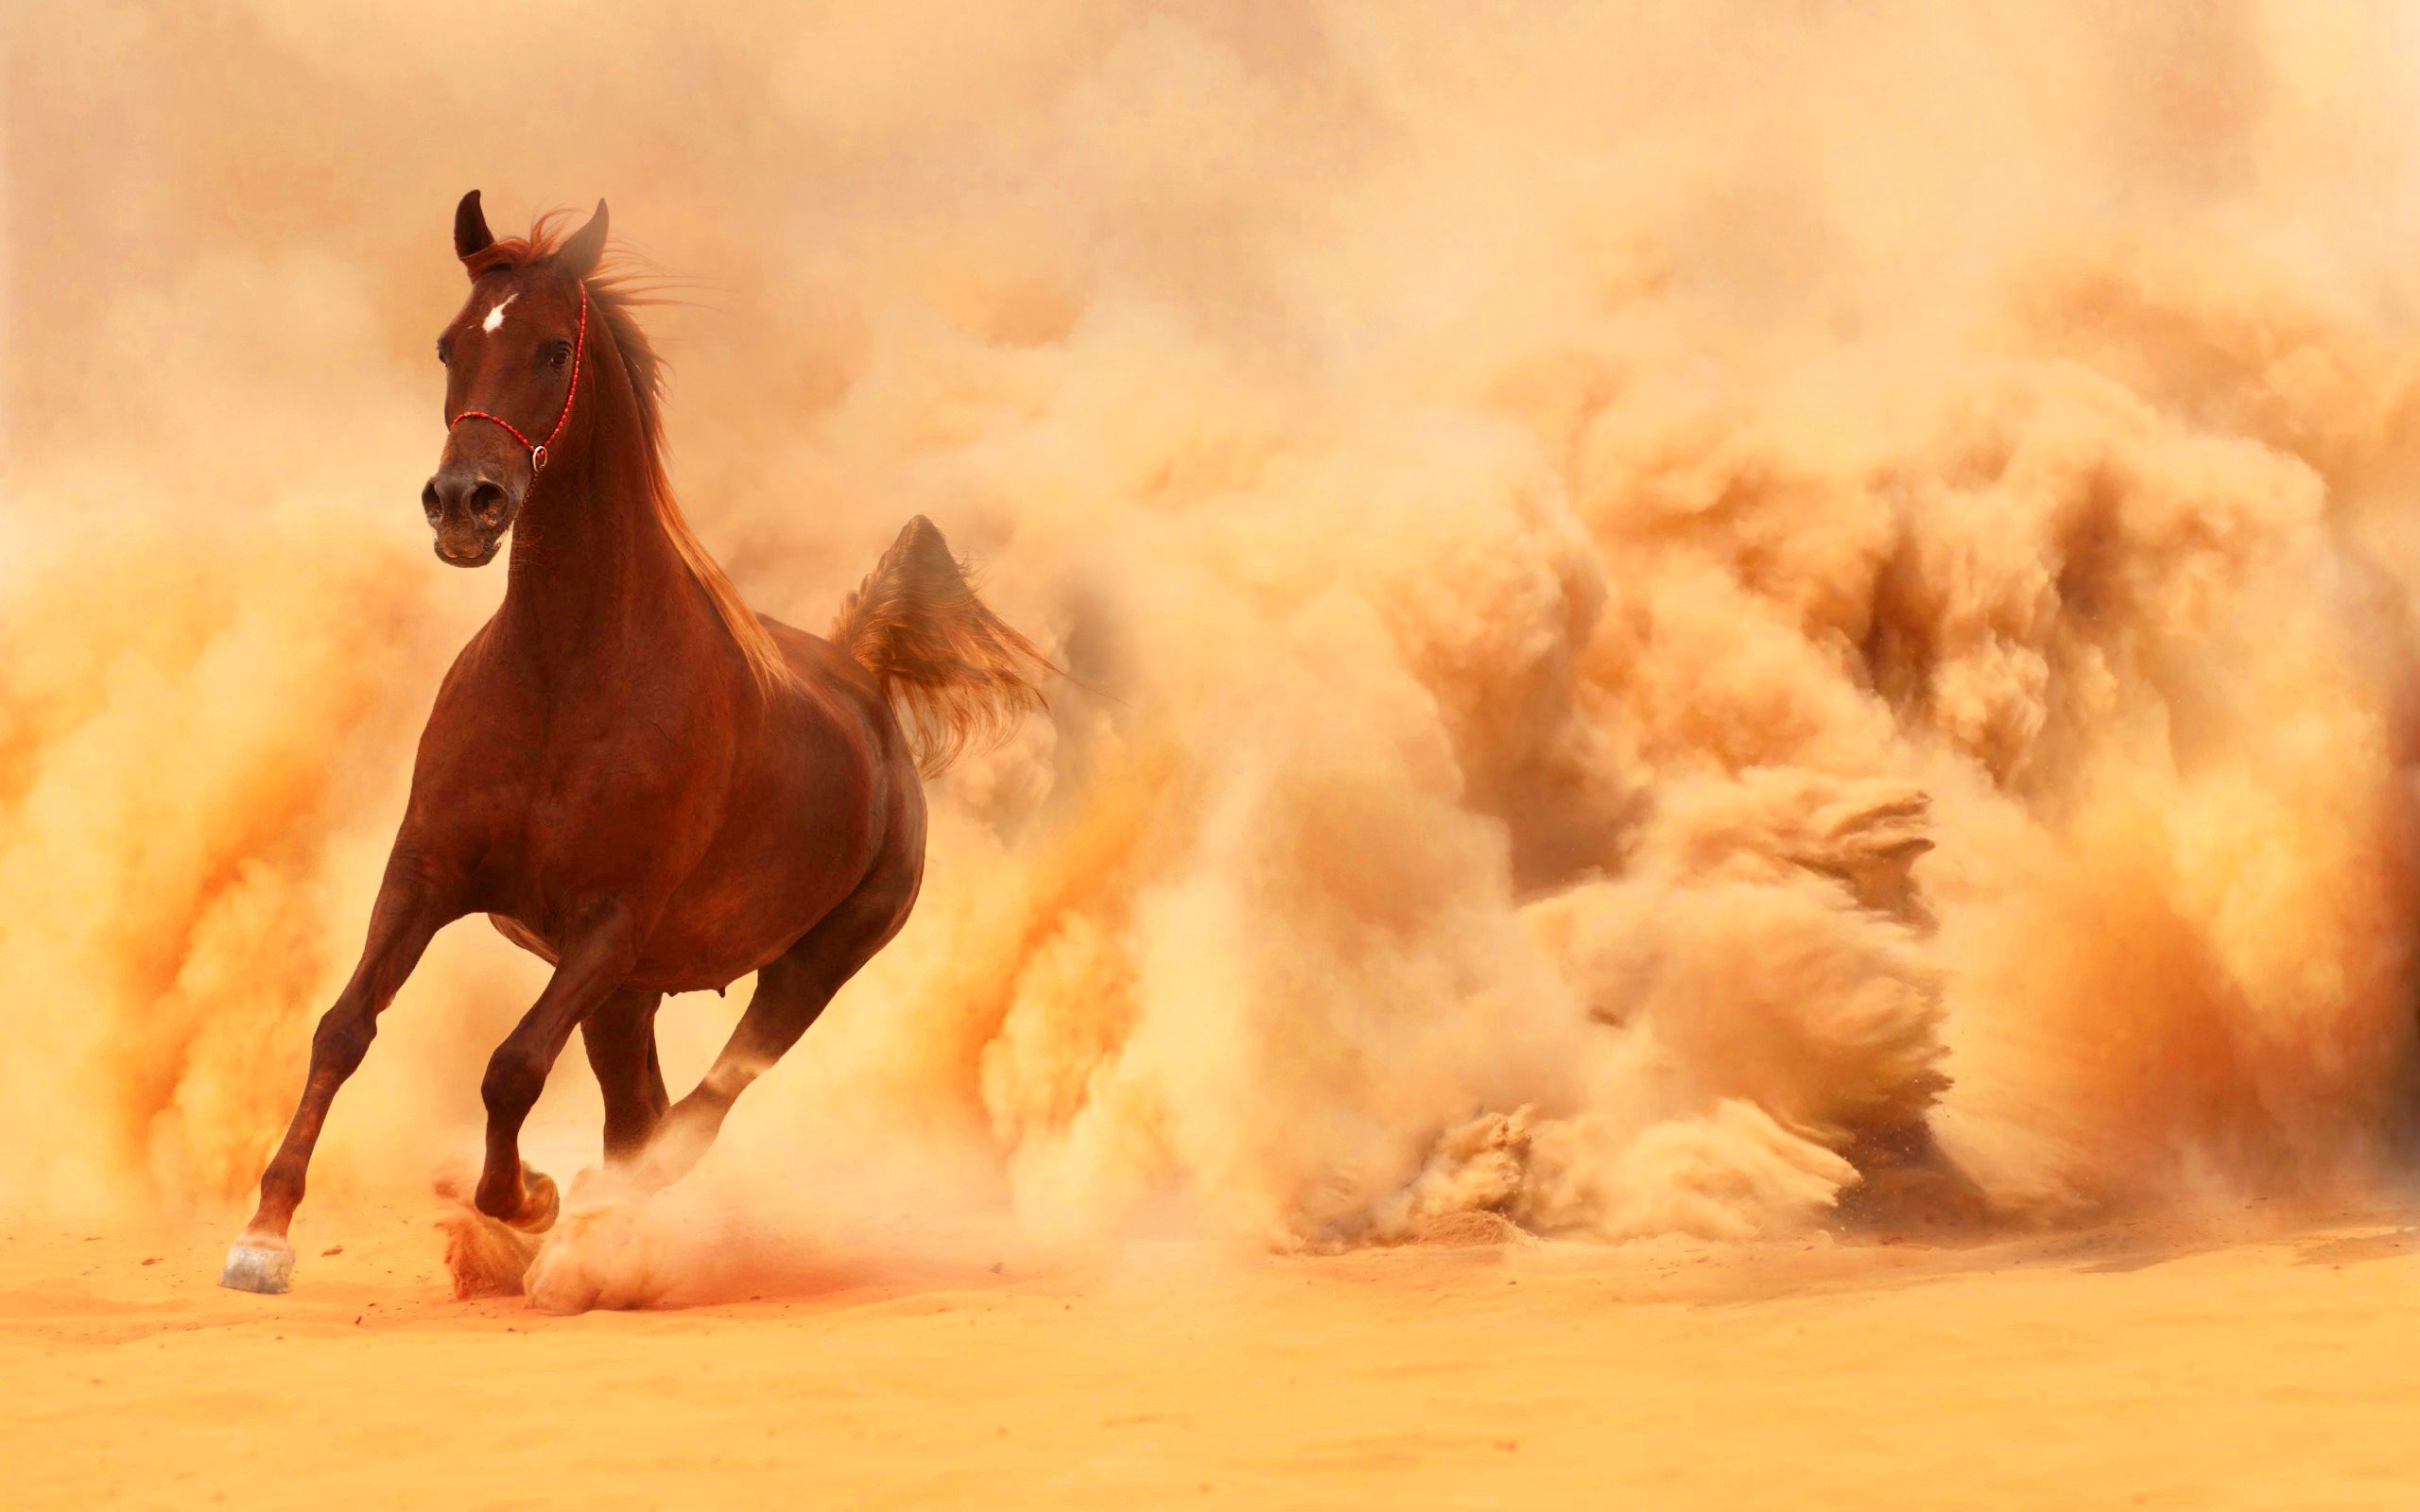 Arabian Horse Wallpaper Pictures Image